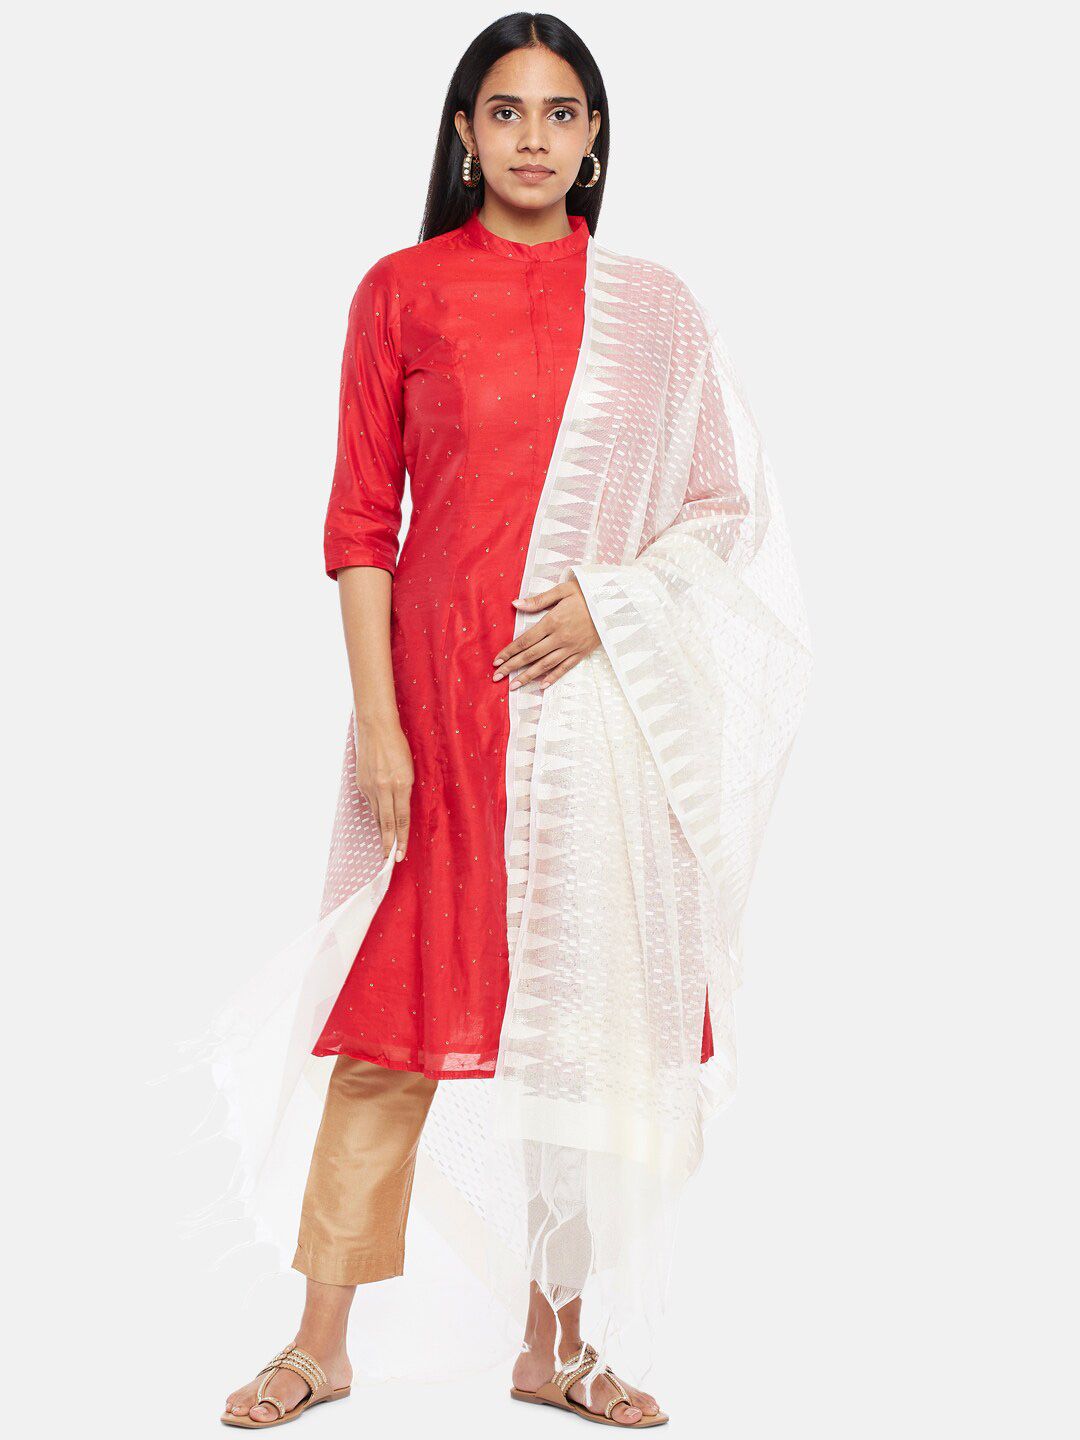 RANGMANCH BY PANTALOONS White Woven Design Dupatta Price in India